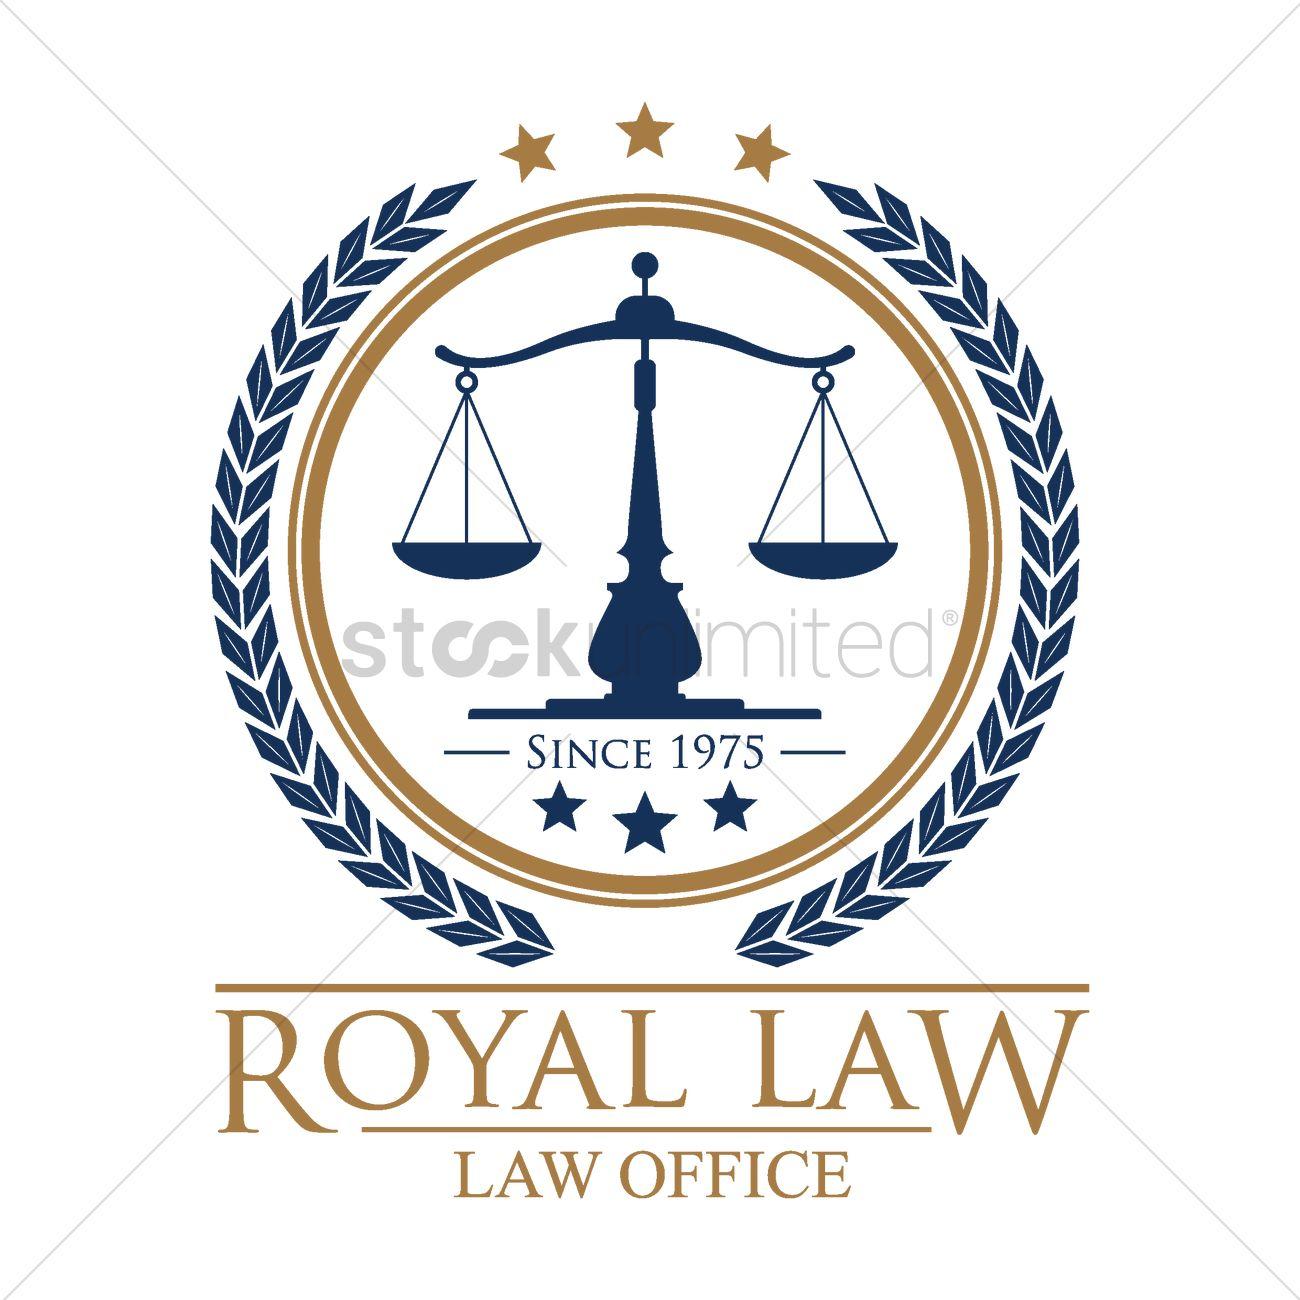 Law Logo - Royal law logo element Vector Image